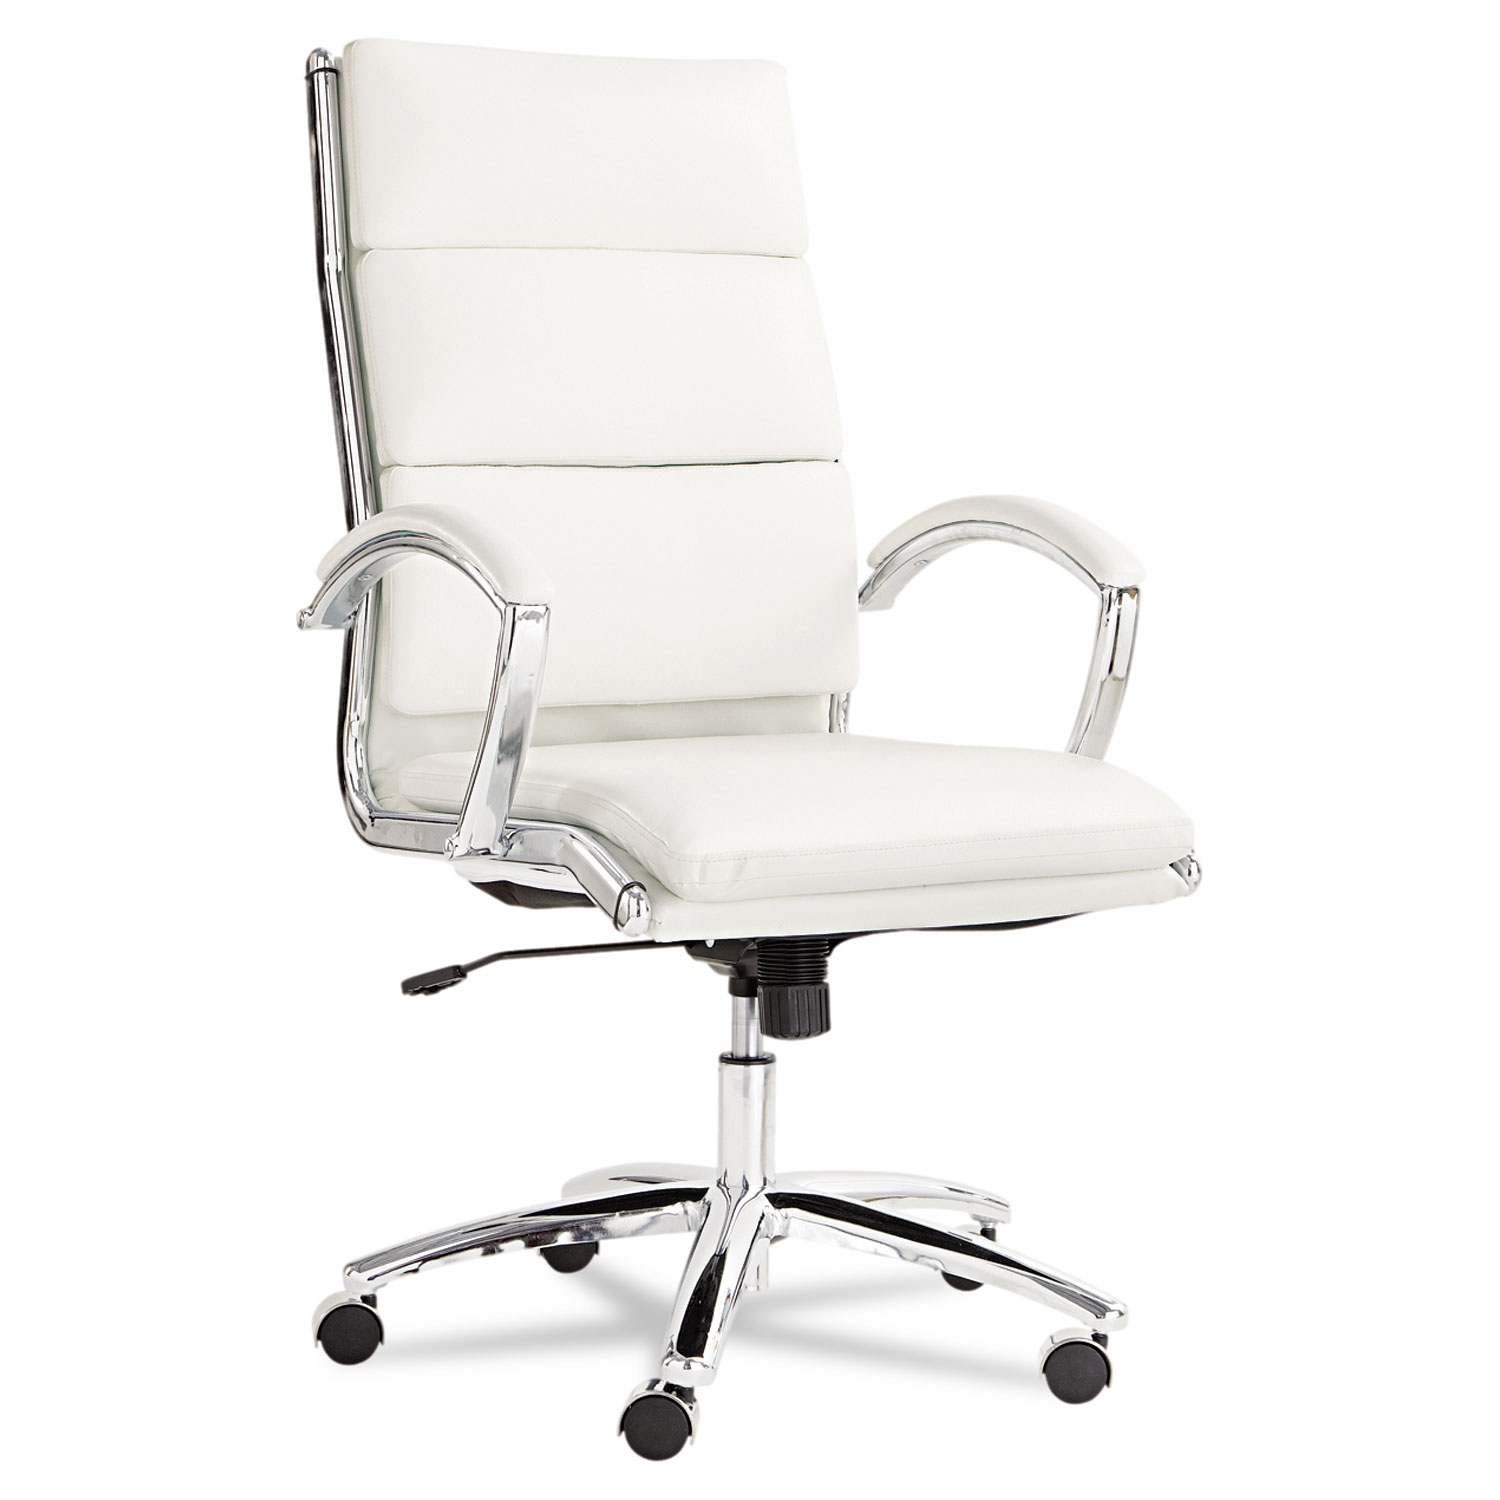  Alera ALENR4106 Alera Neratoli High-Back Slim Profile Chair, Supports up to 275 lbs., White Seat/White Back, Chrome Base (ALENR4106) 